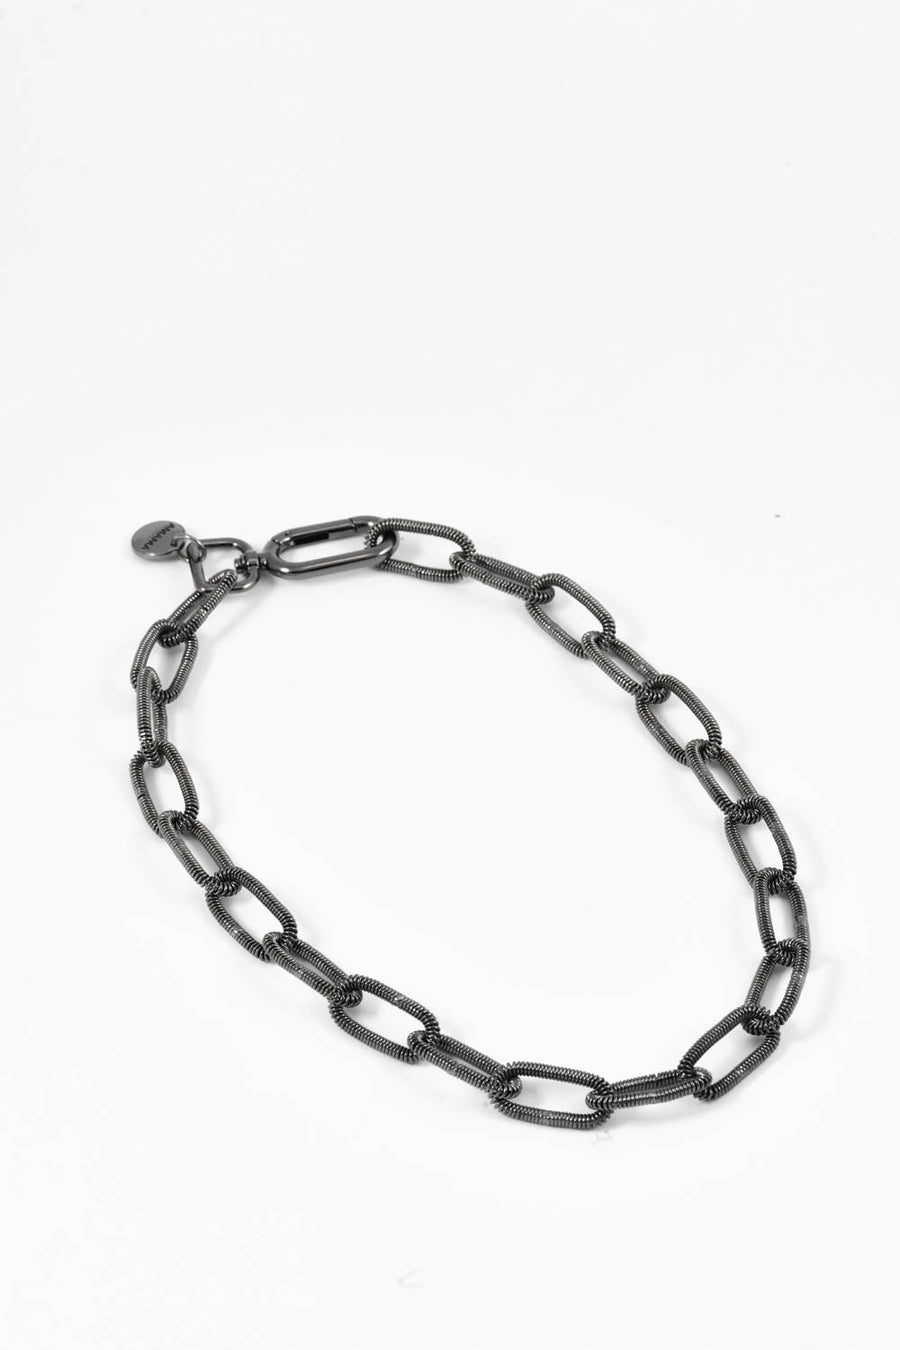 Orb link Necklace in Gunmetal